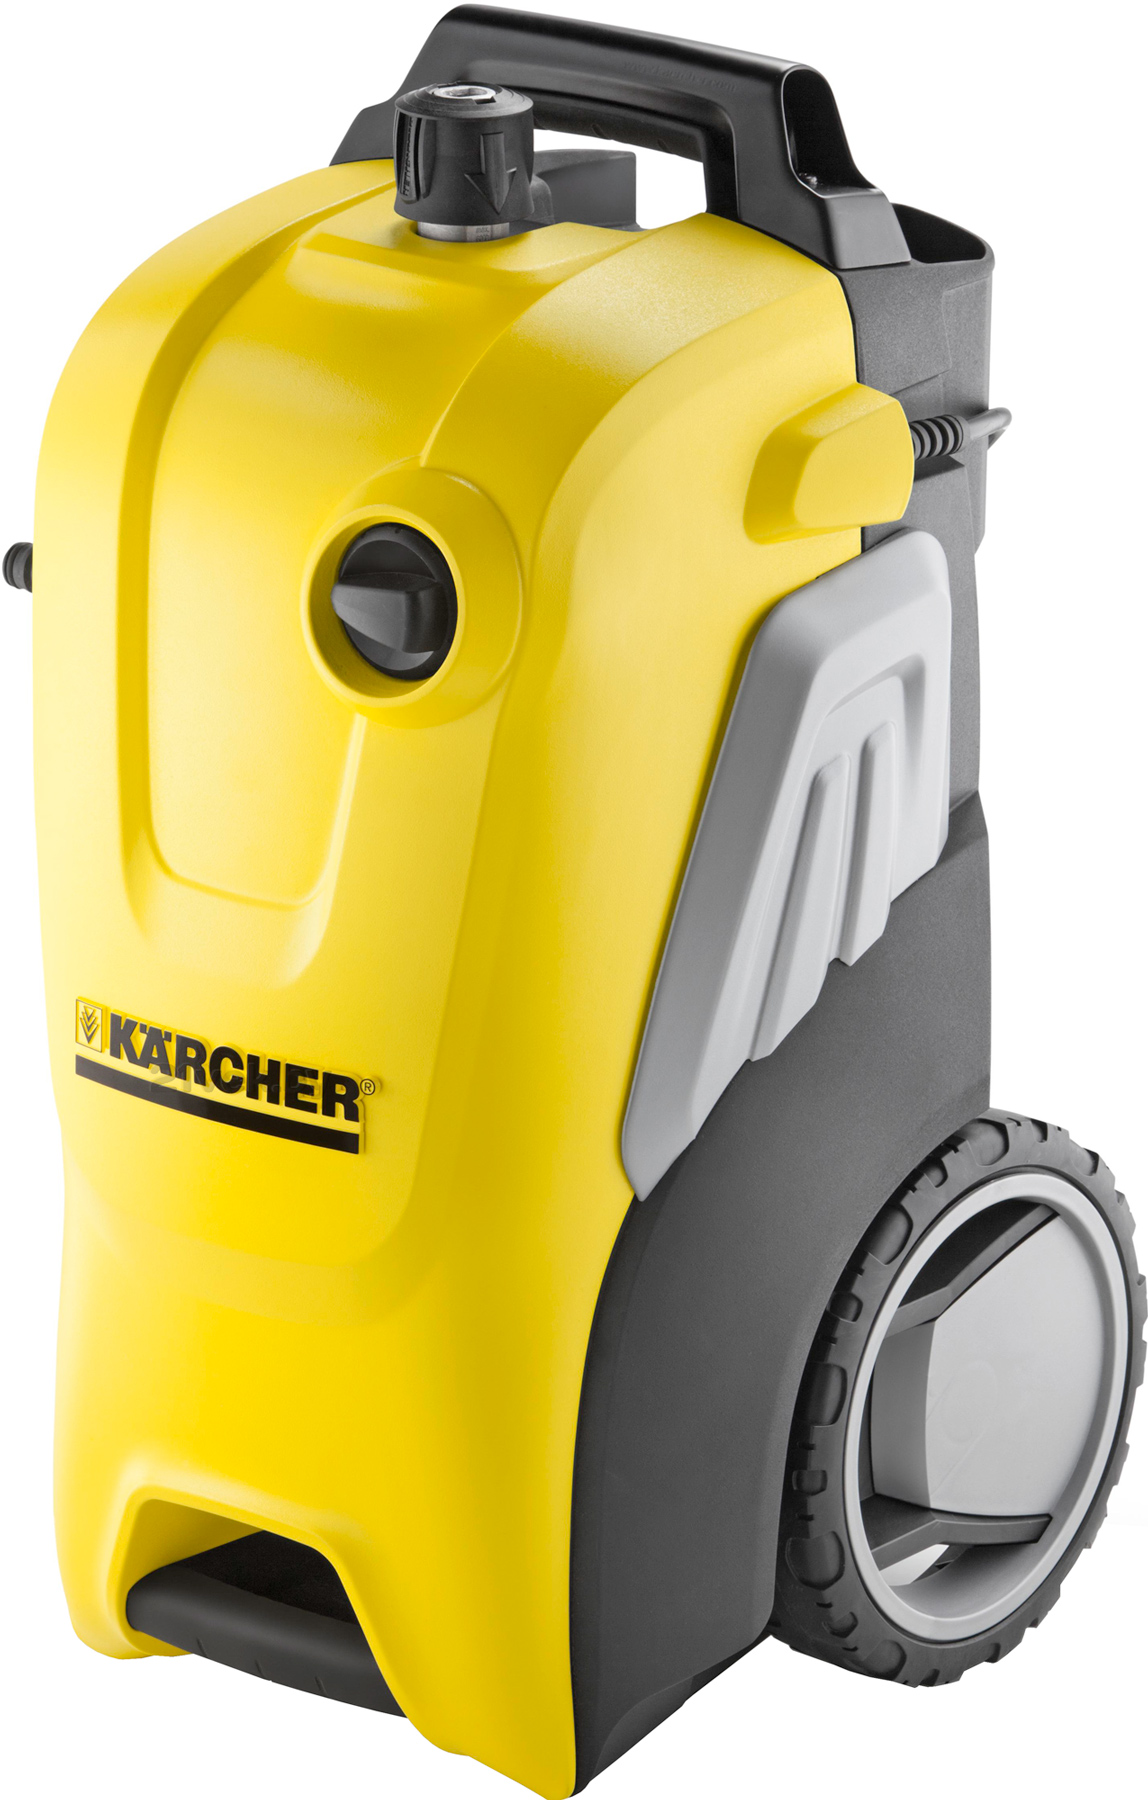  Керхер (Karcher) K 7 Compact: описание, цена, отзывы, онлайн .